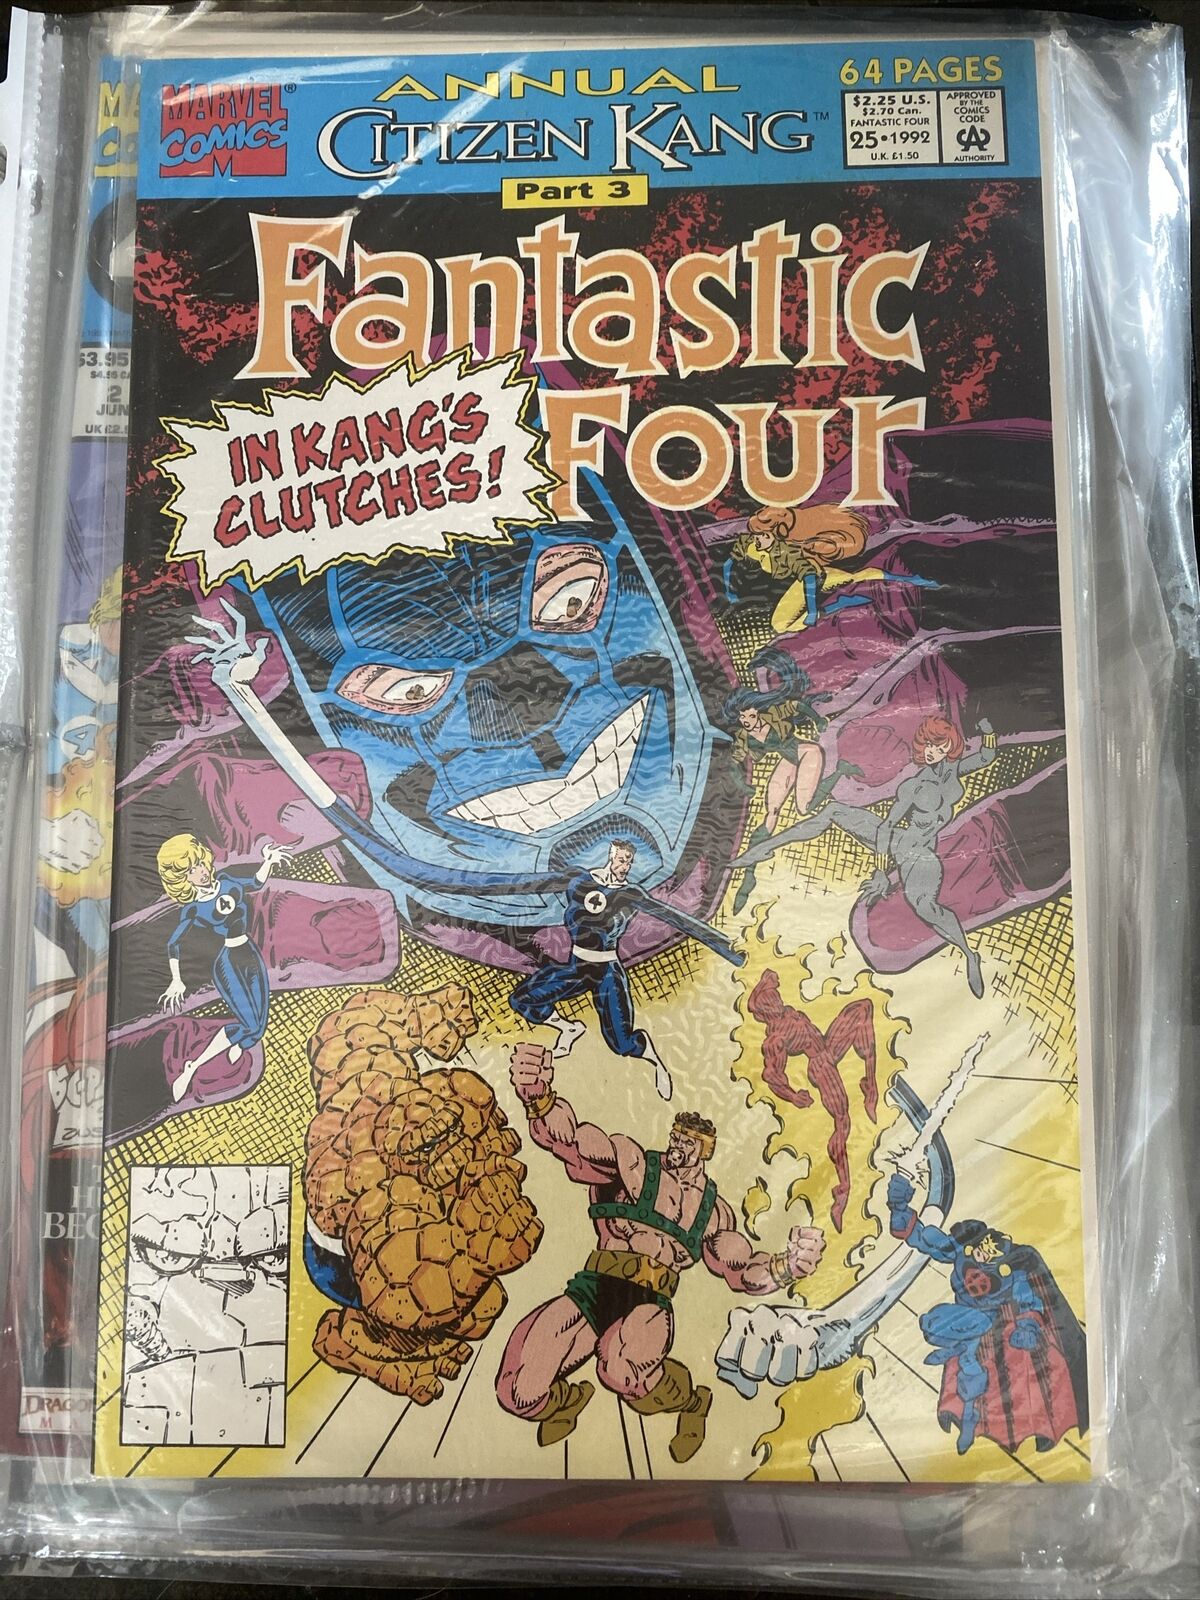 1992 Marvel Comics Fantastic Four Annual Vol. 1 #25 Citizen Kang Part 3